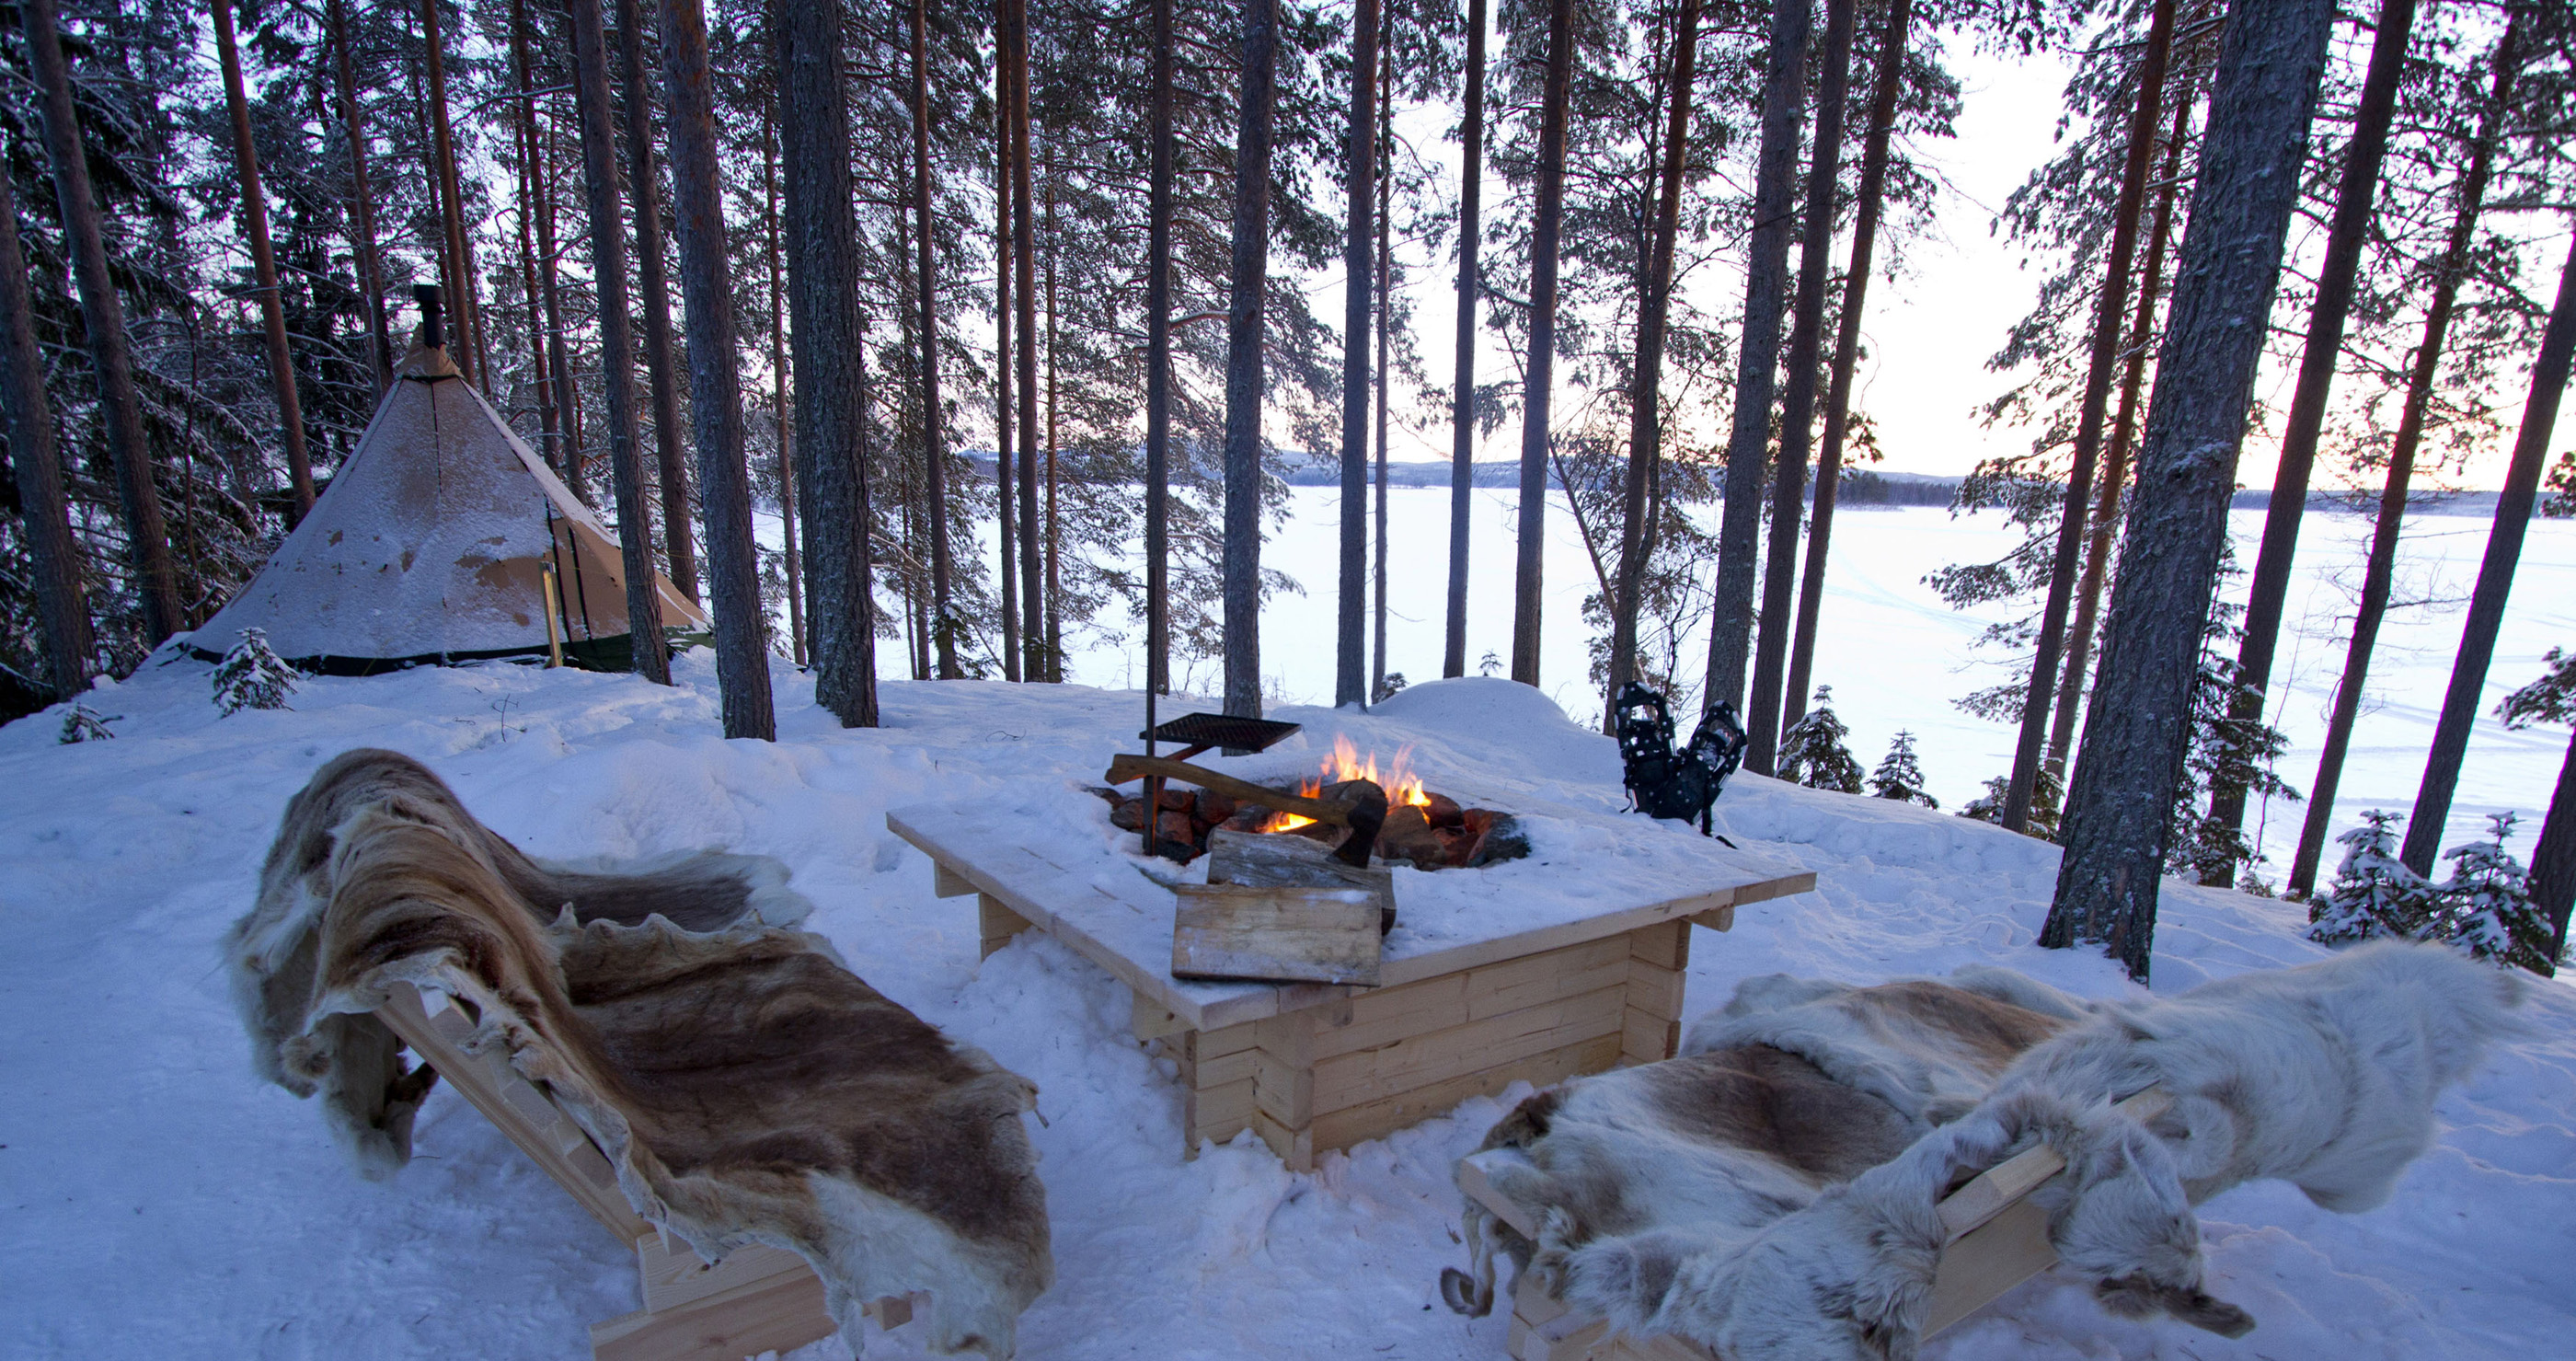 Fireplace at Aurora Safari, Sweden